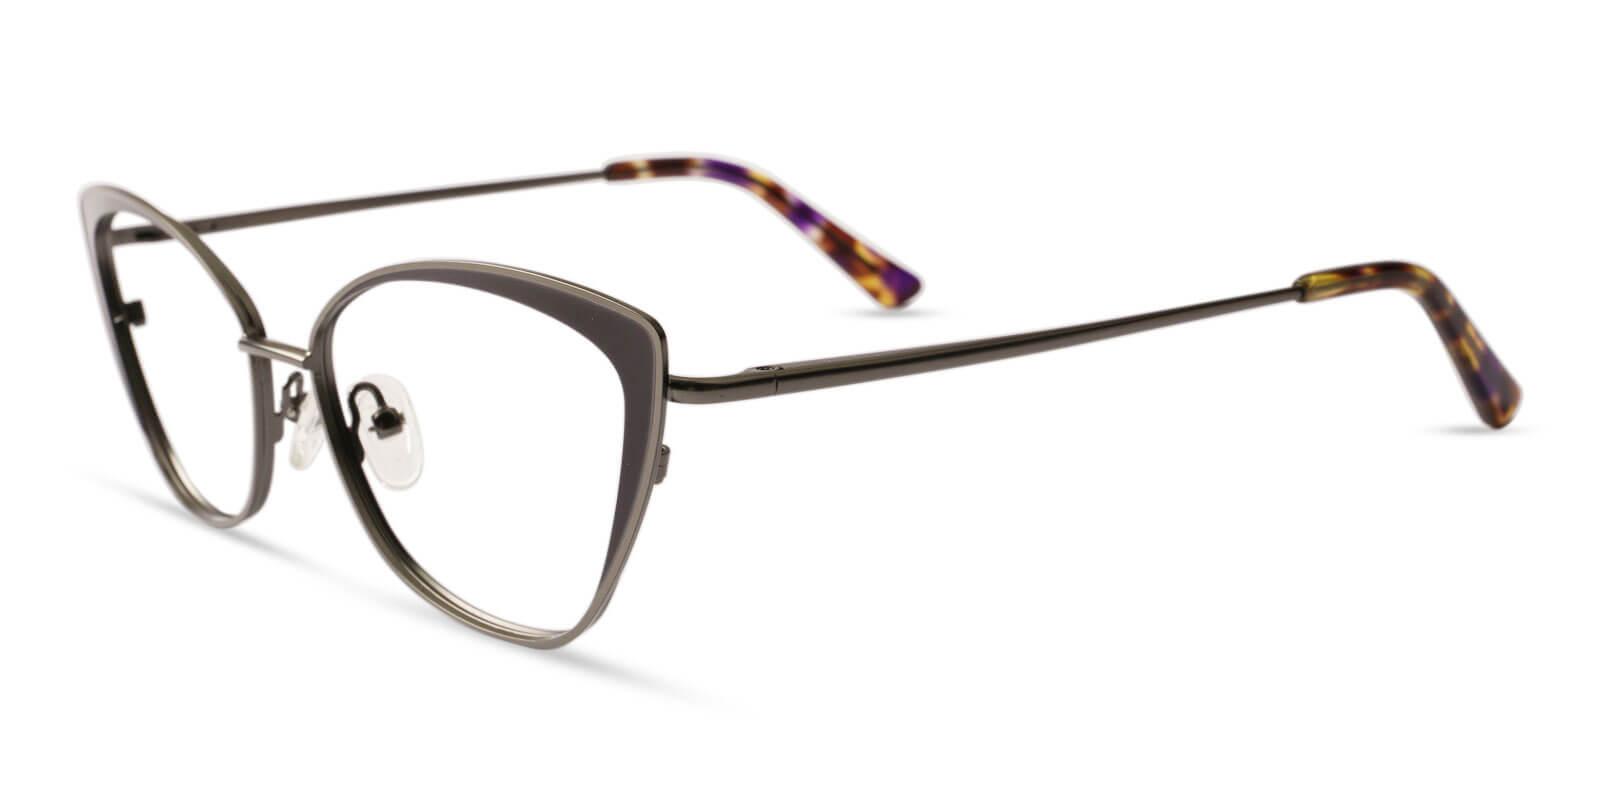 Paisley Gun Metal Eyeglasses , NosePads , SpringHinges Frames from ABBE Glasses